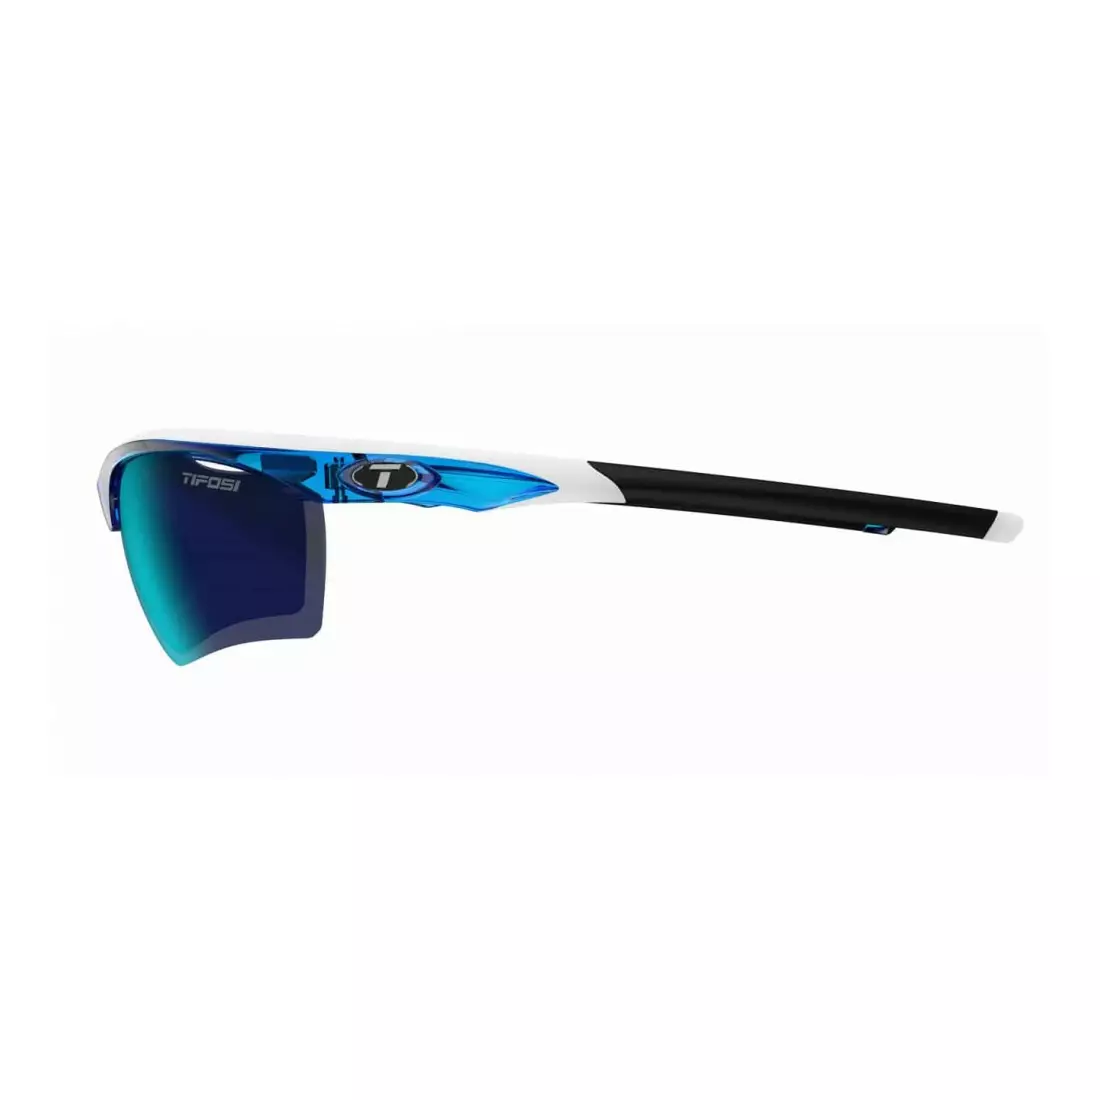 TIFOSI sportovní brýle s vyměnitelnými skly vero clarion skycloud (Clarion Blue, AC Red, Clear) TFI-1470107722